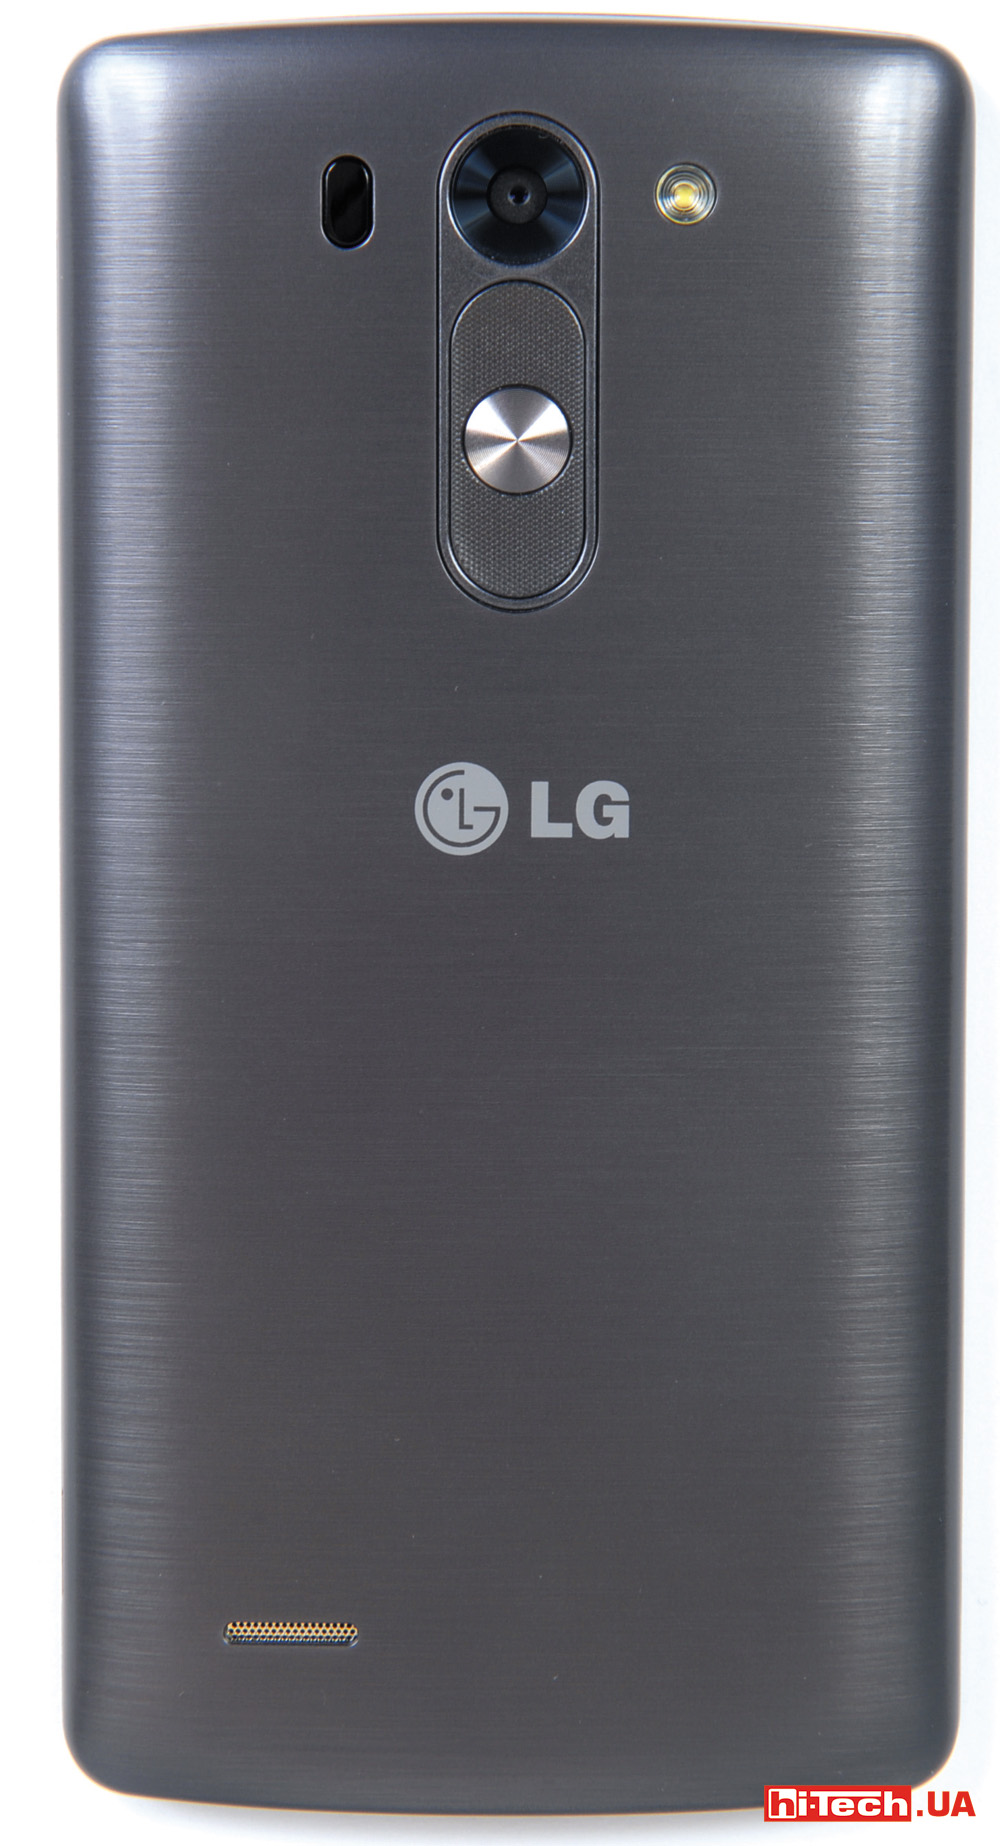 LG_G3s-Back